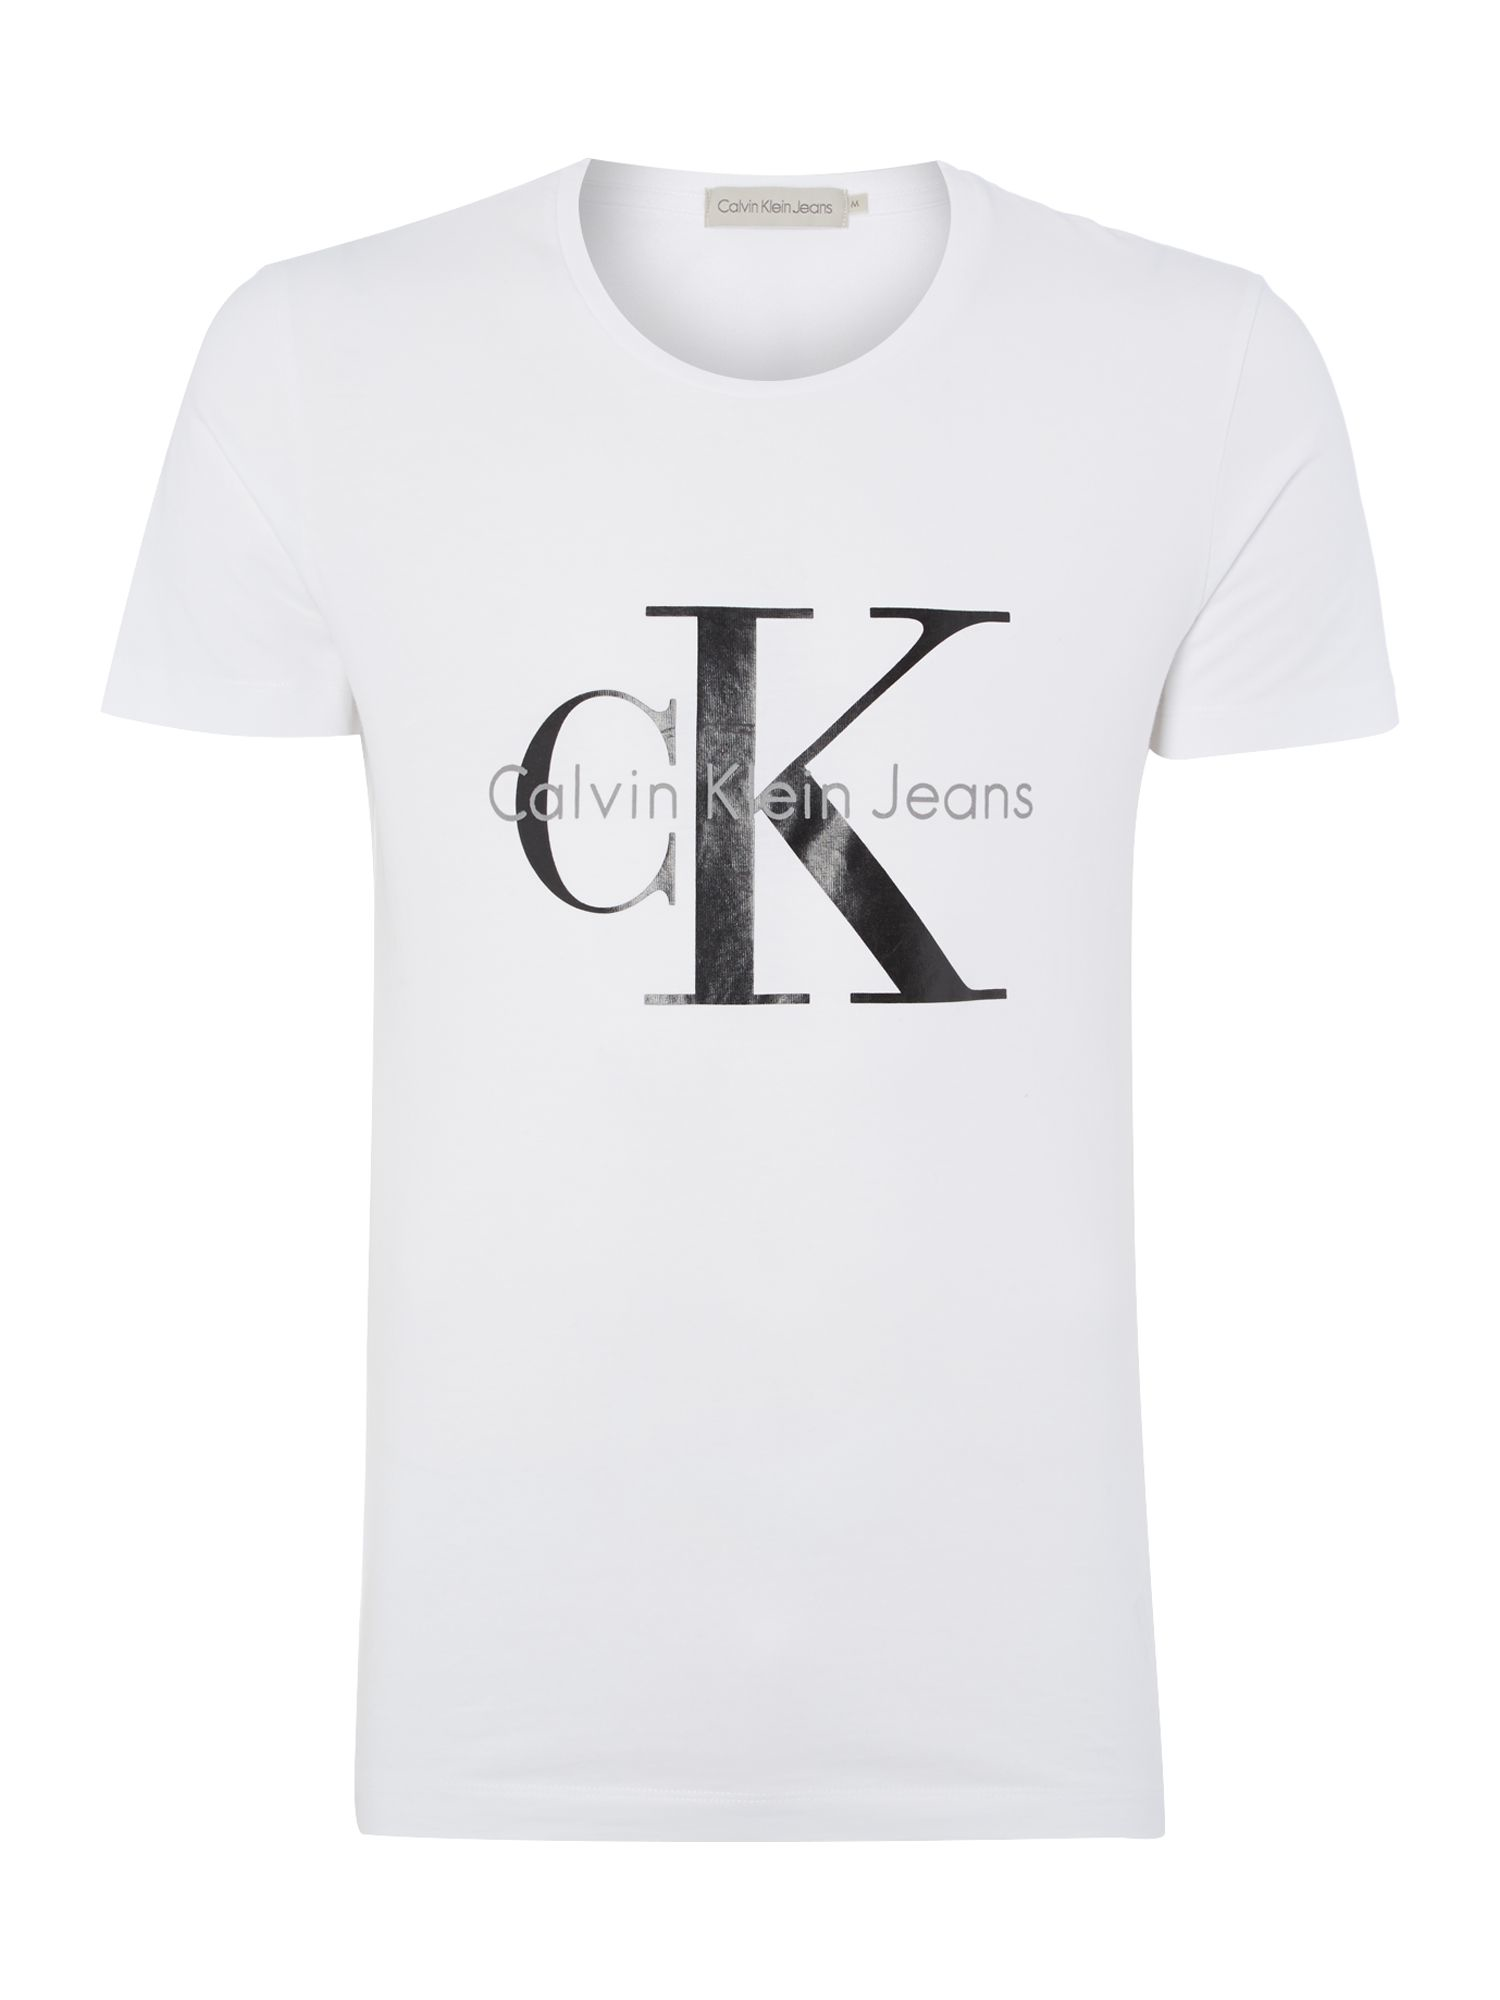 Calvin klein Tee T-shirt in White for Men | Lyst